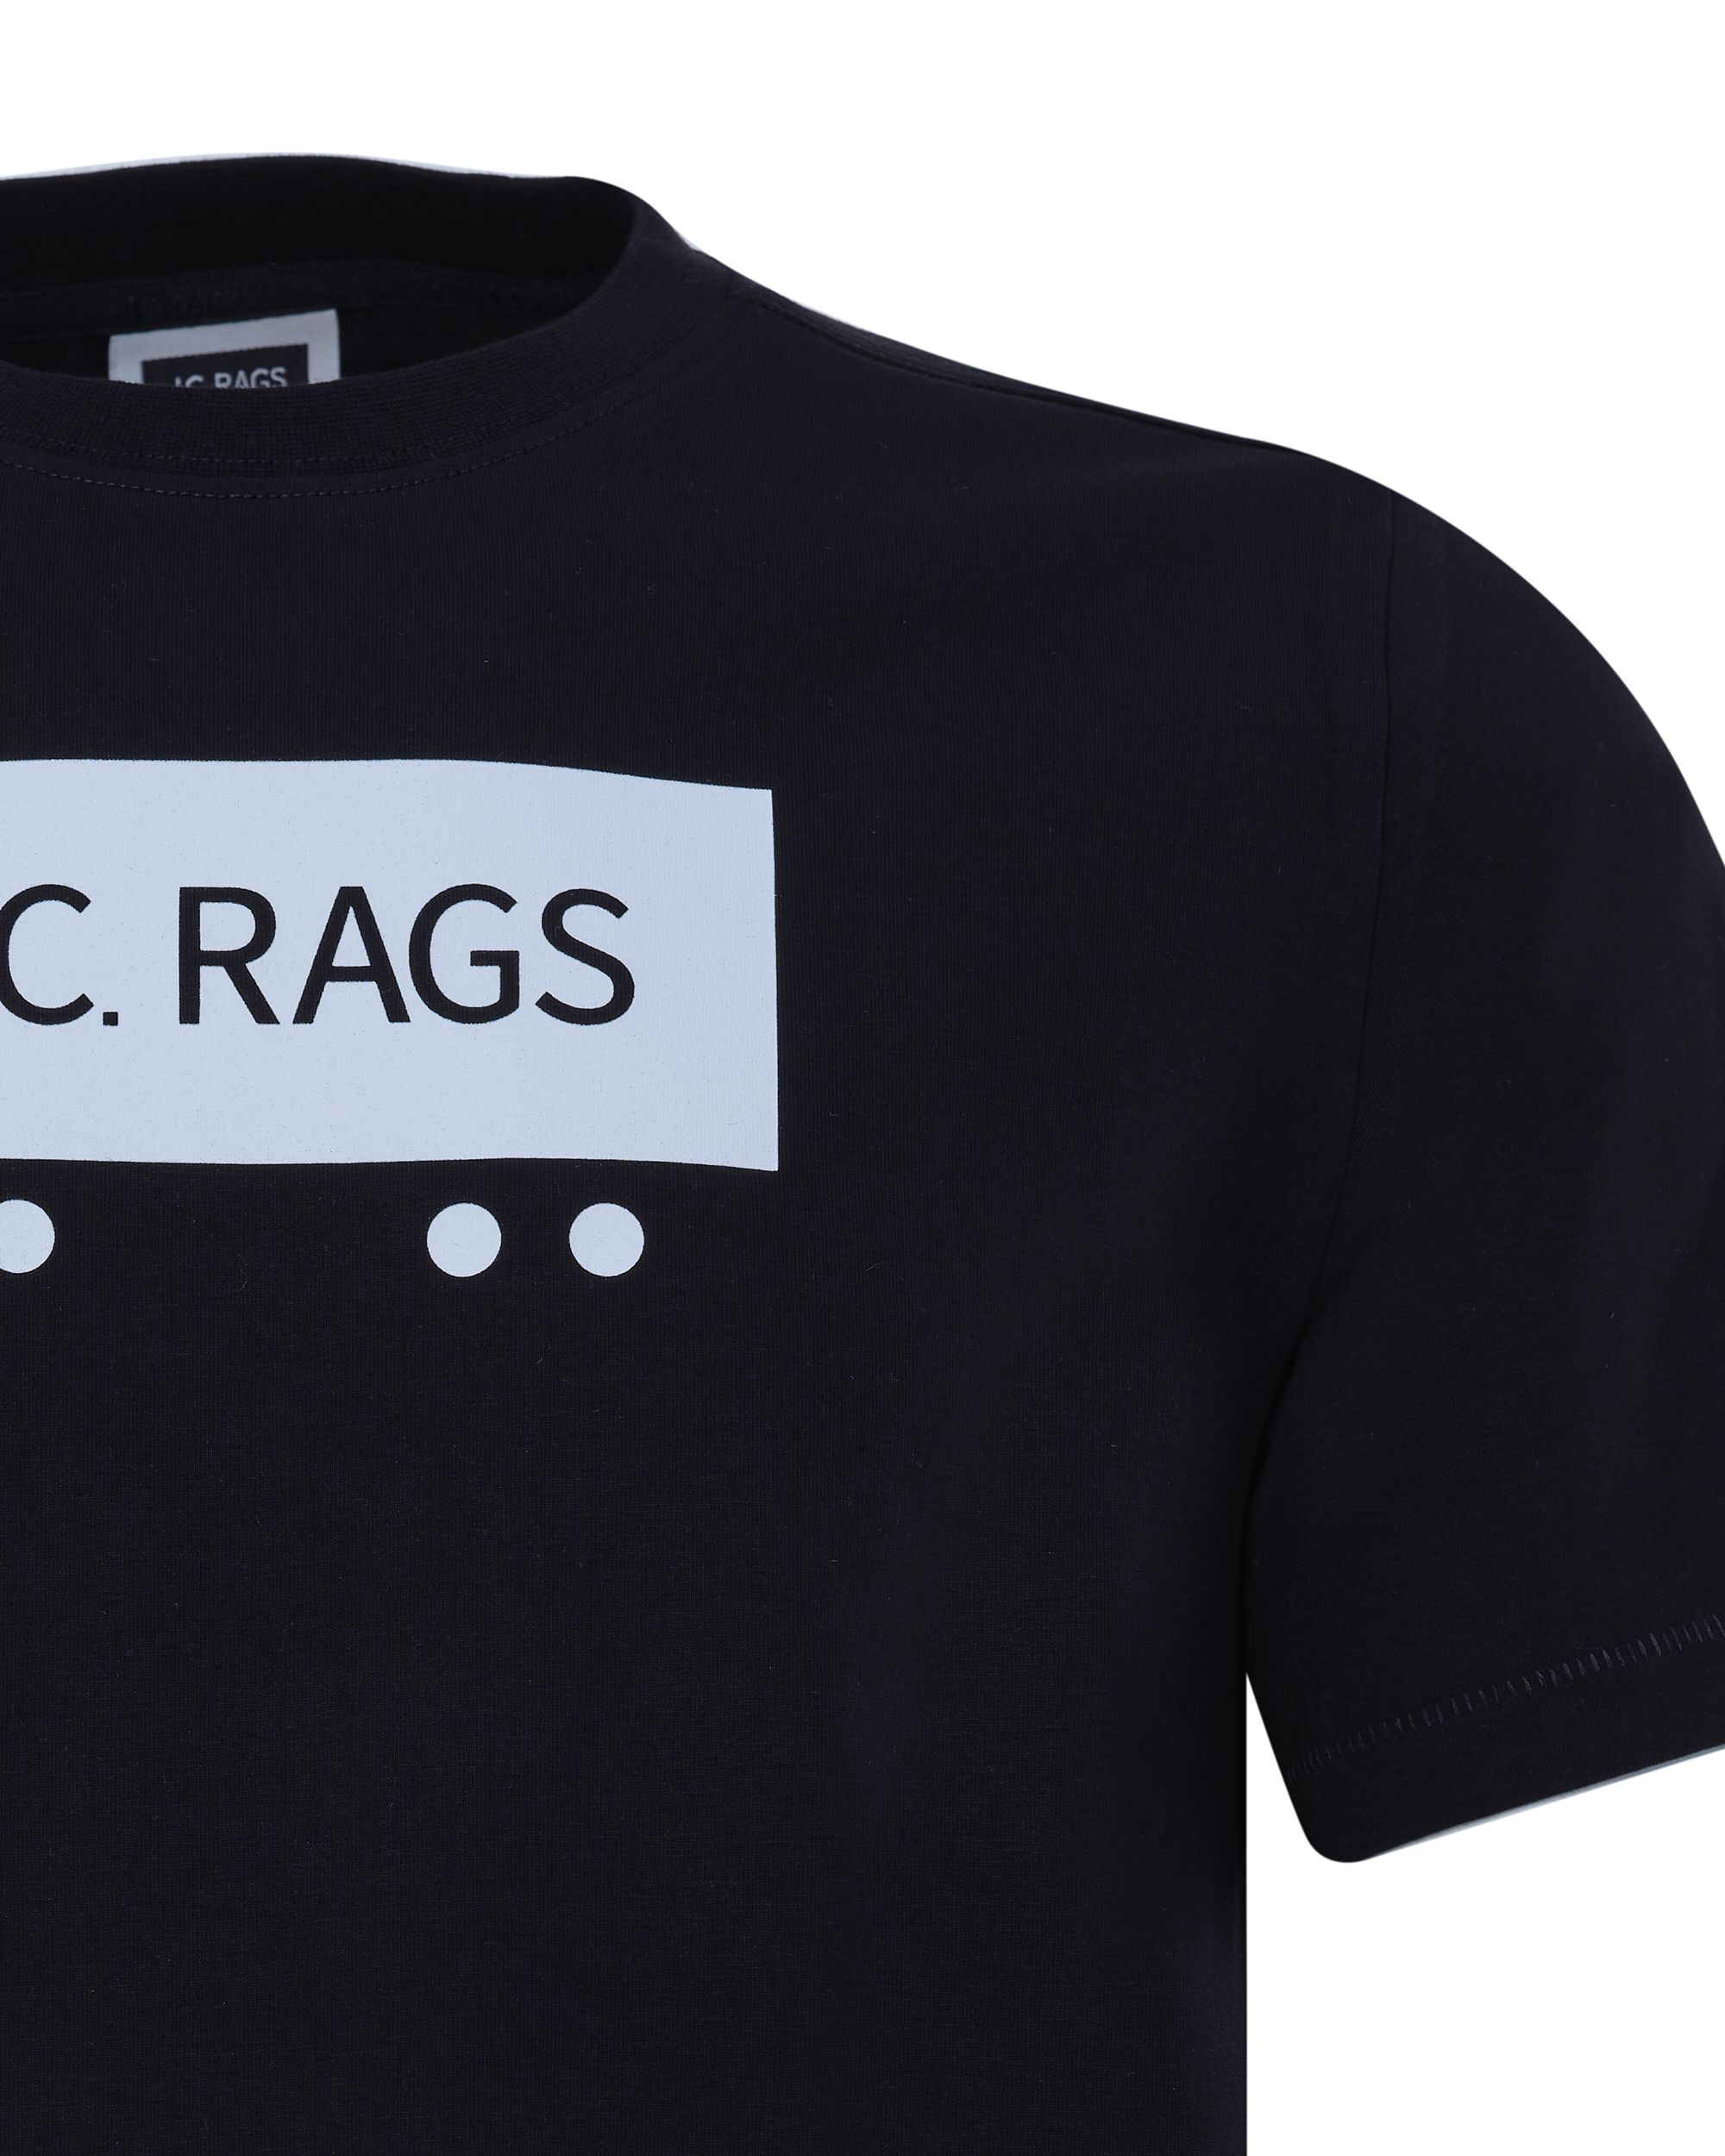 J.C. RAGS Joe T-shirt KM Black 078927-001-L